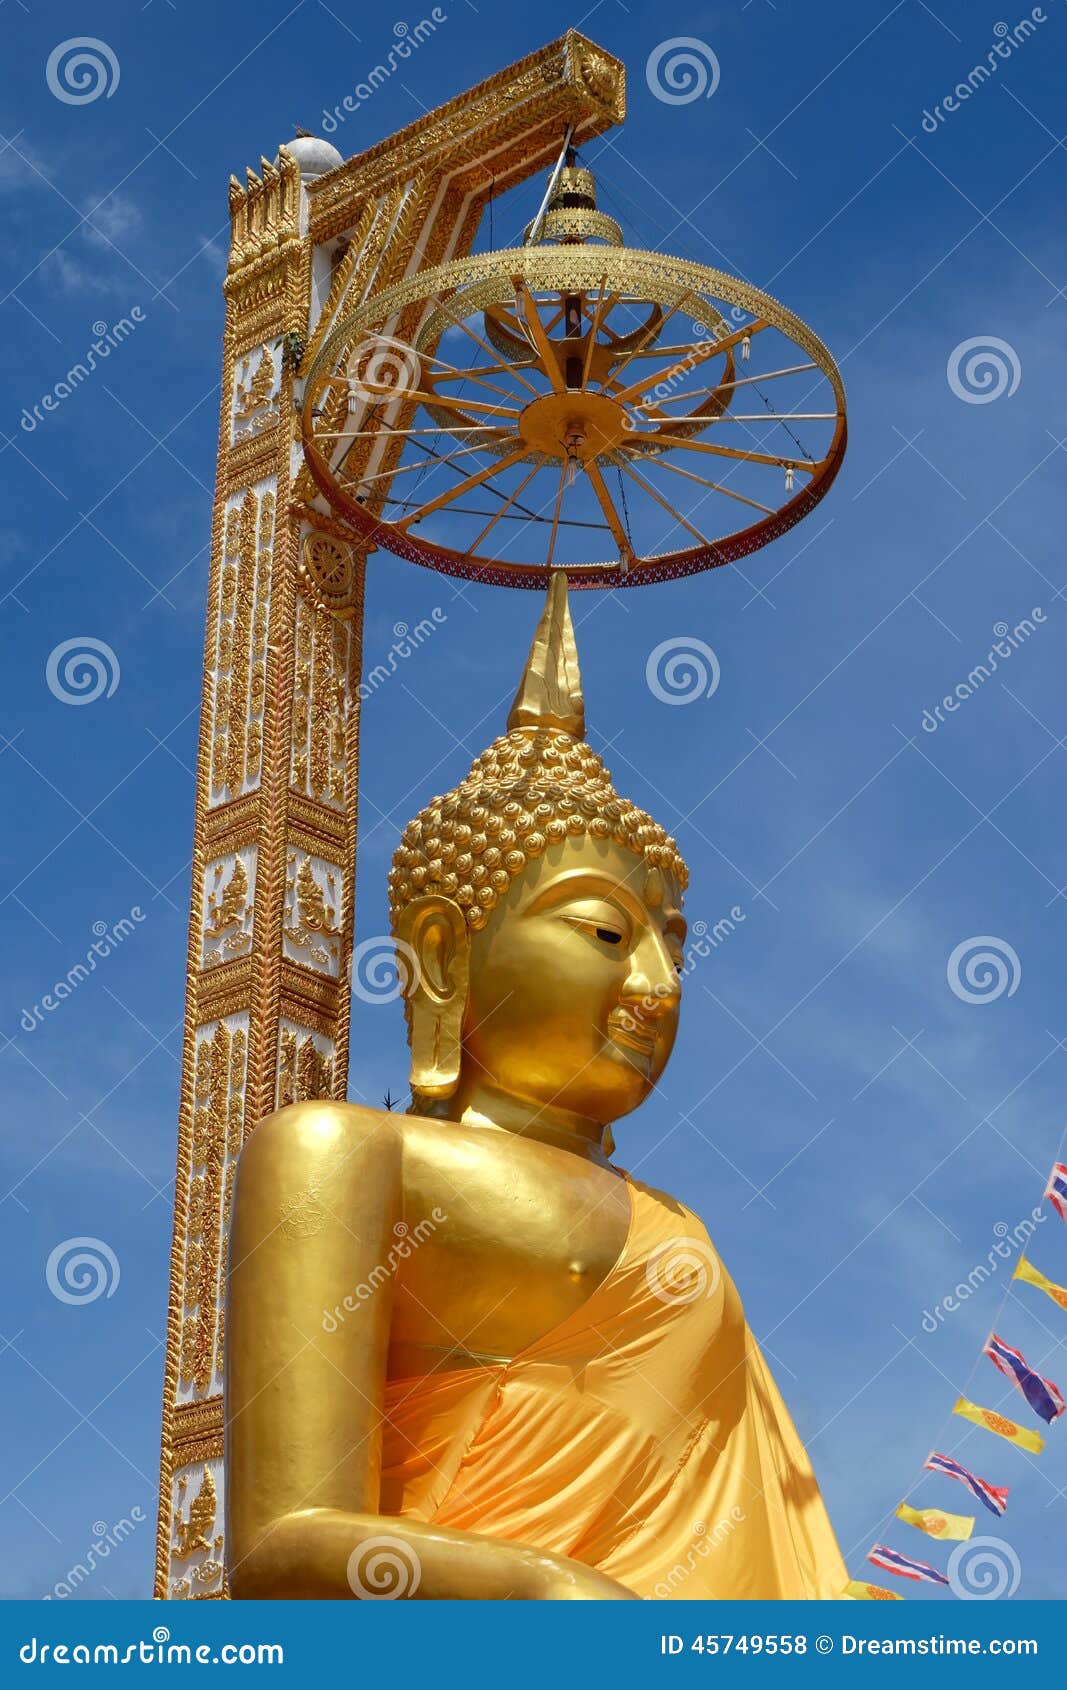 Golden buddha stature stock photo. Image of buddha, thailand - 45749558